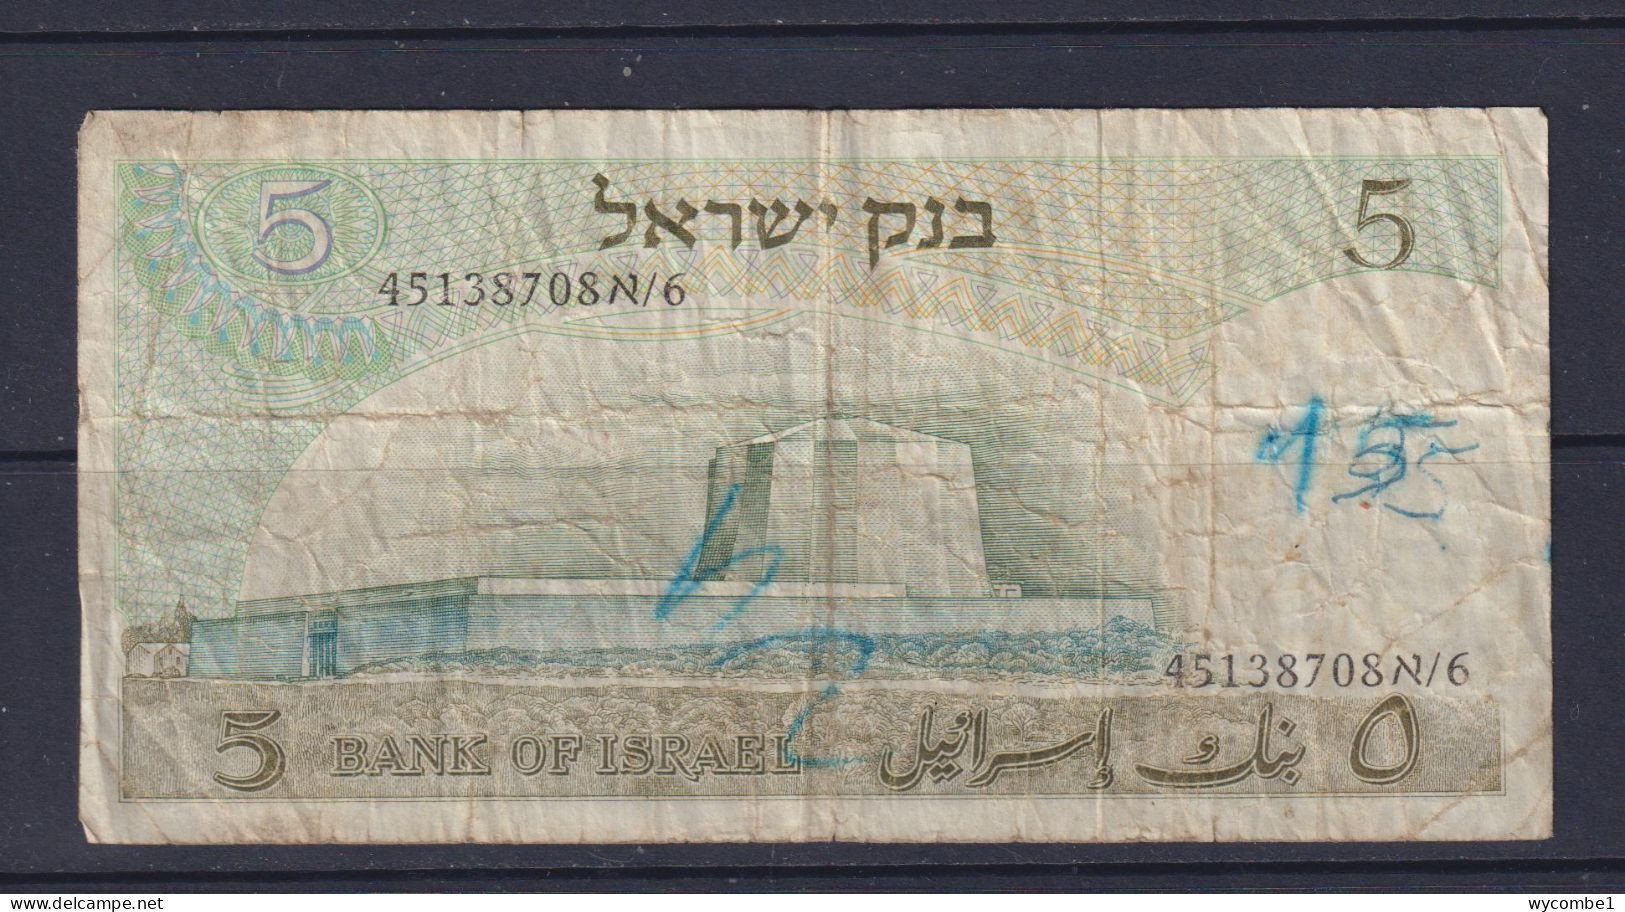 ISRAEL - 1968 5 Lirot Circulated Banknote - Israel